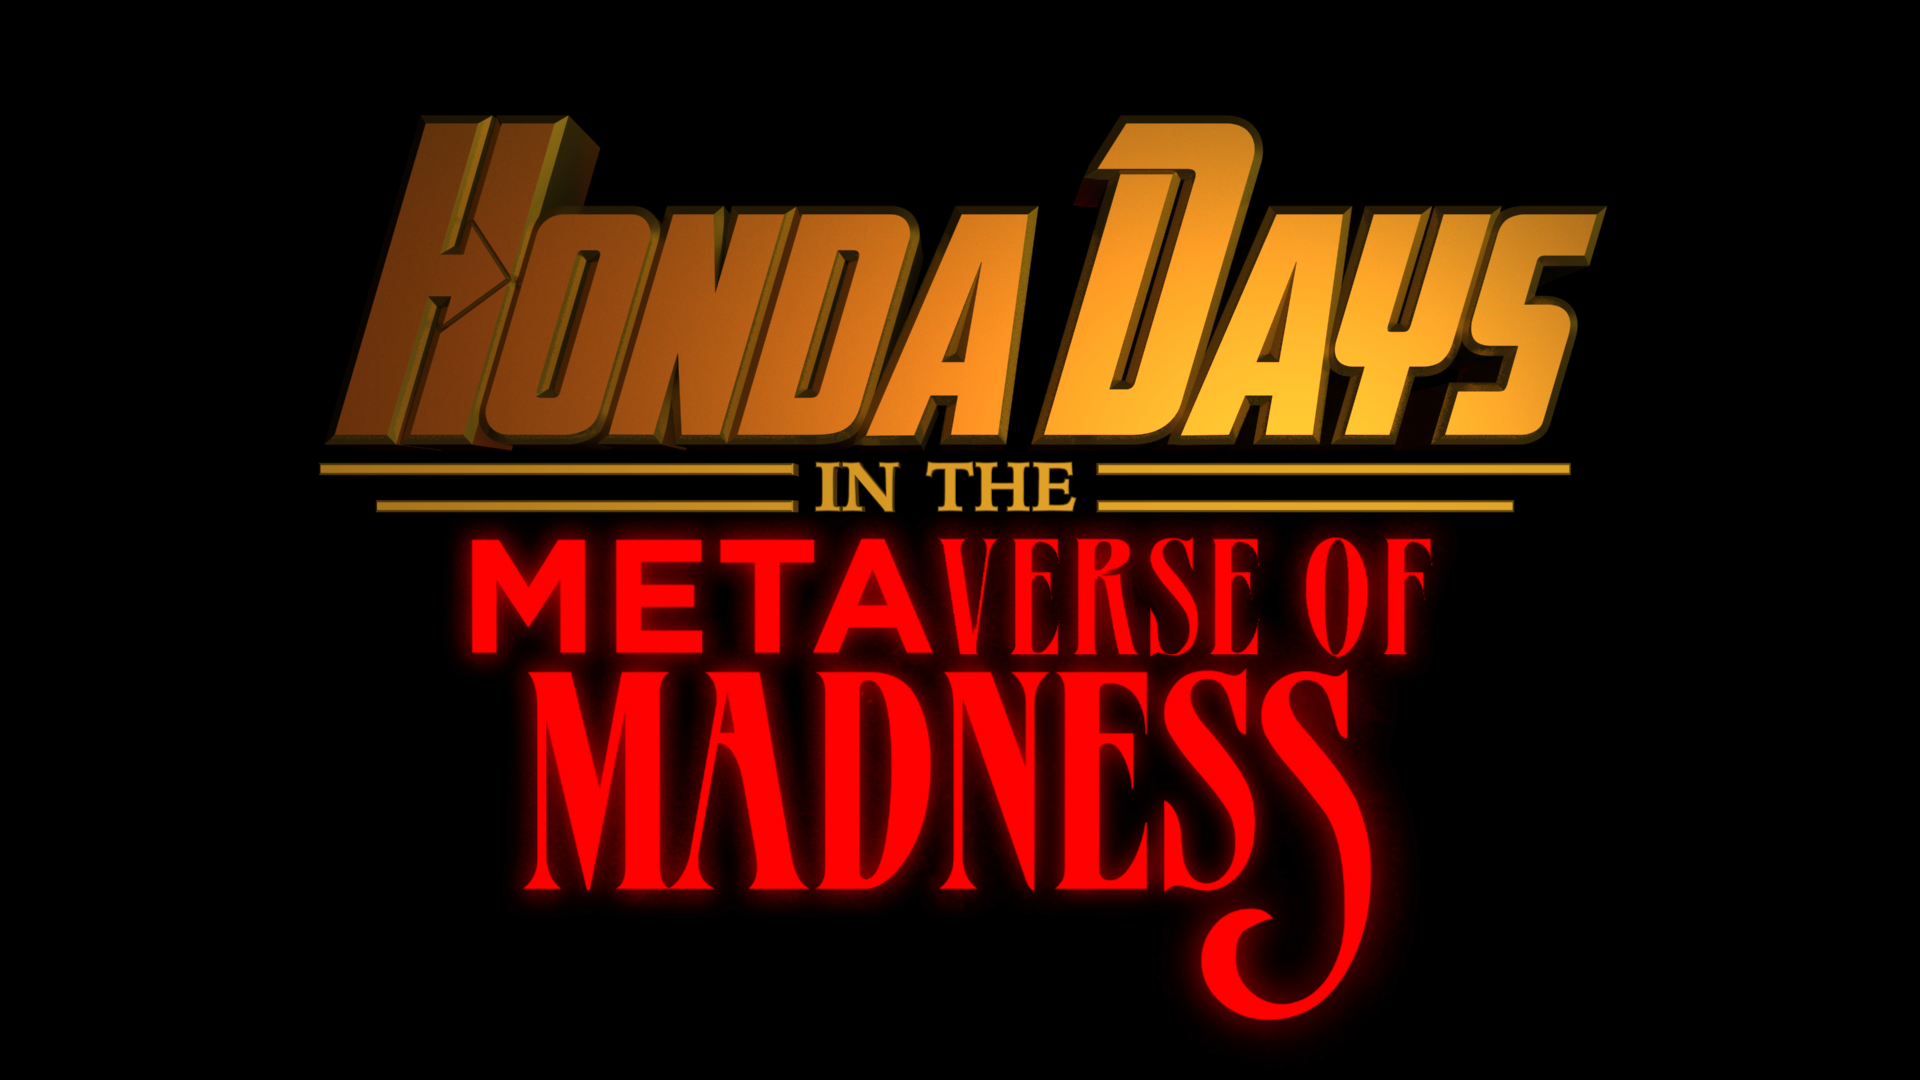 Honda Days Multiverse of Madness logo